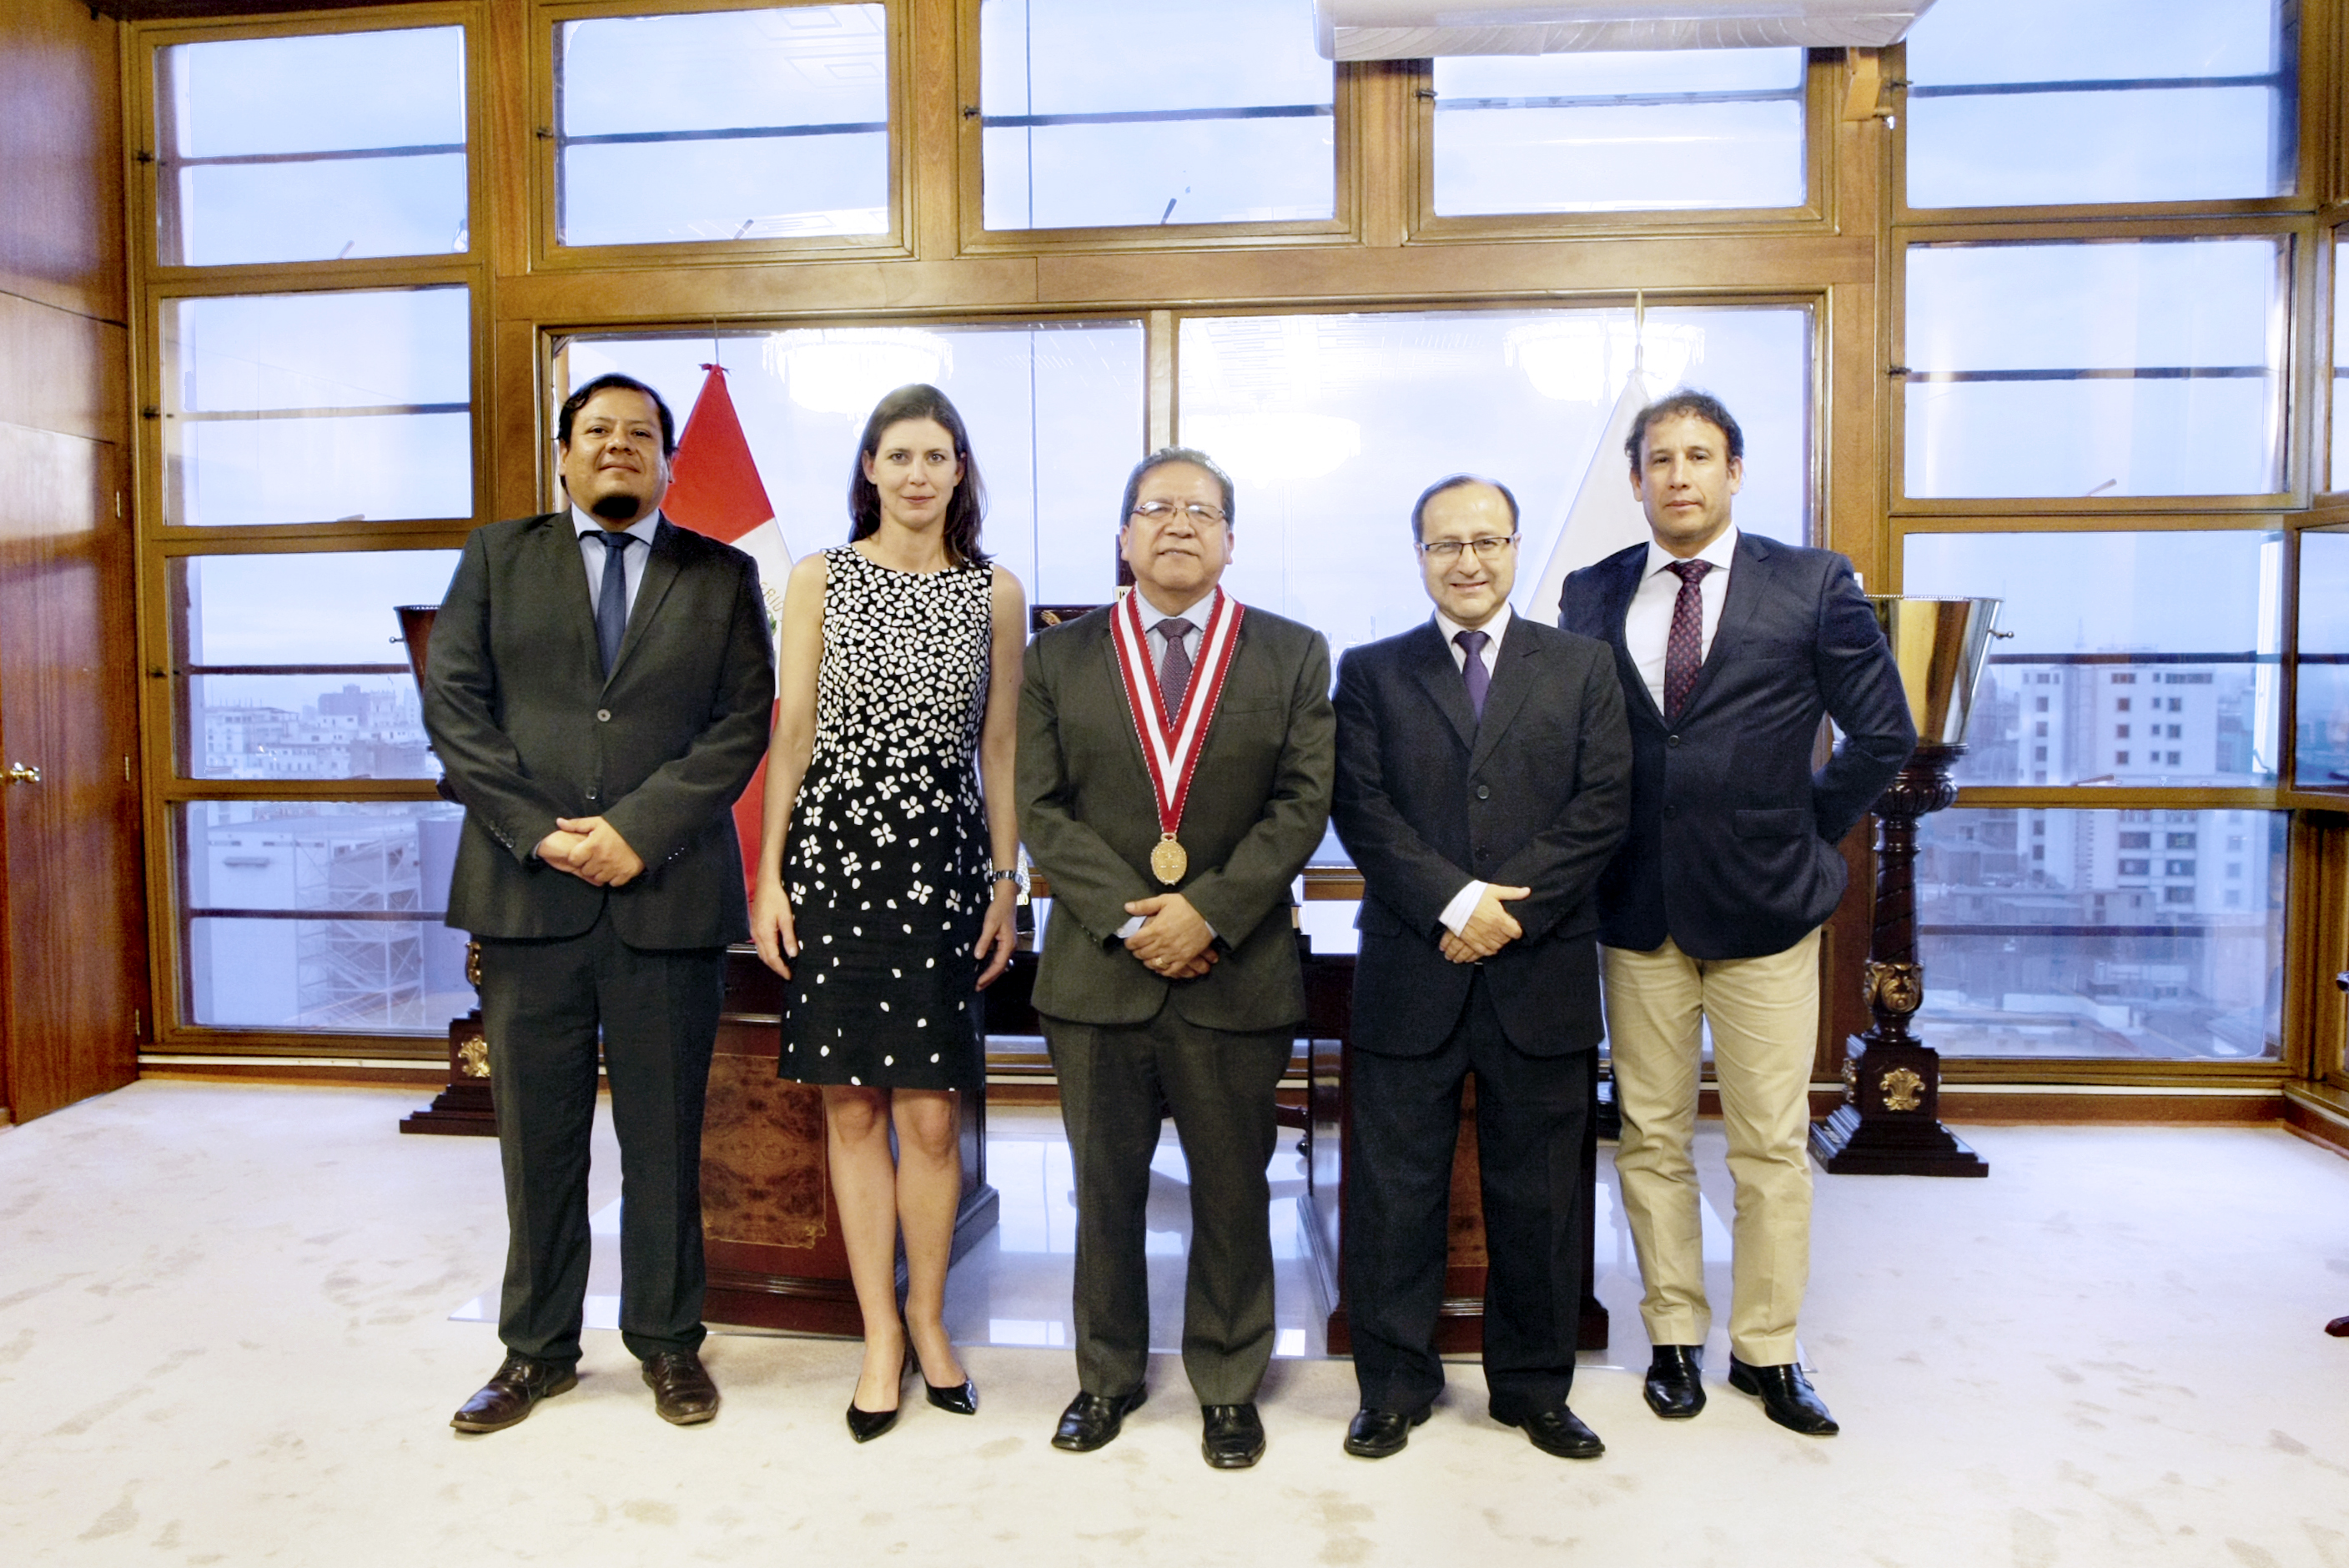 Oscar Solórzano and Gretta Fenner pose with Peruvian officials.